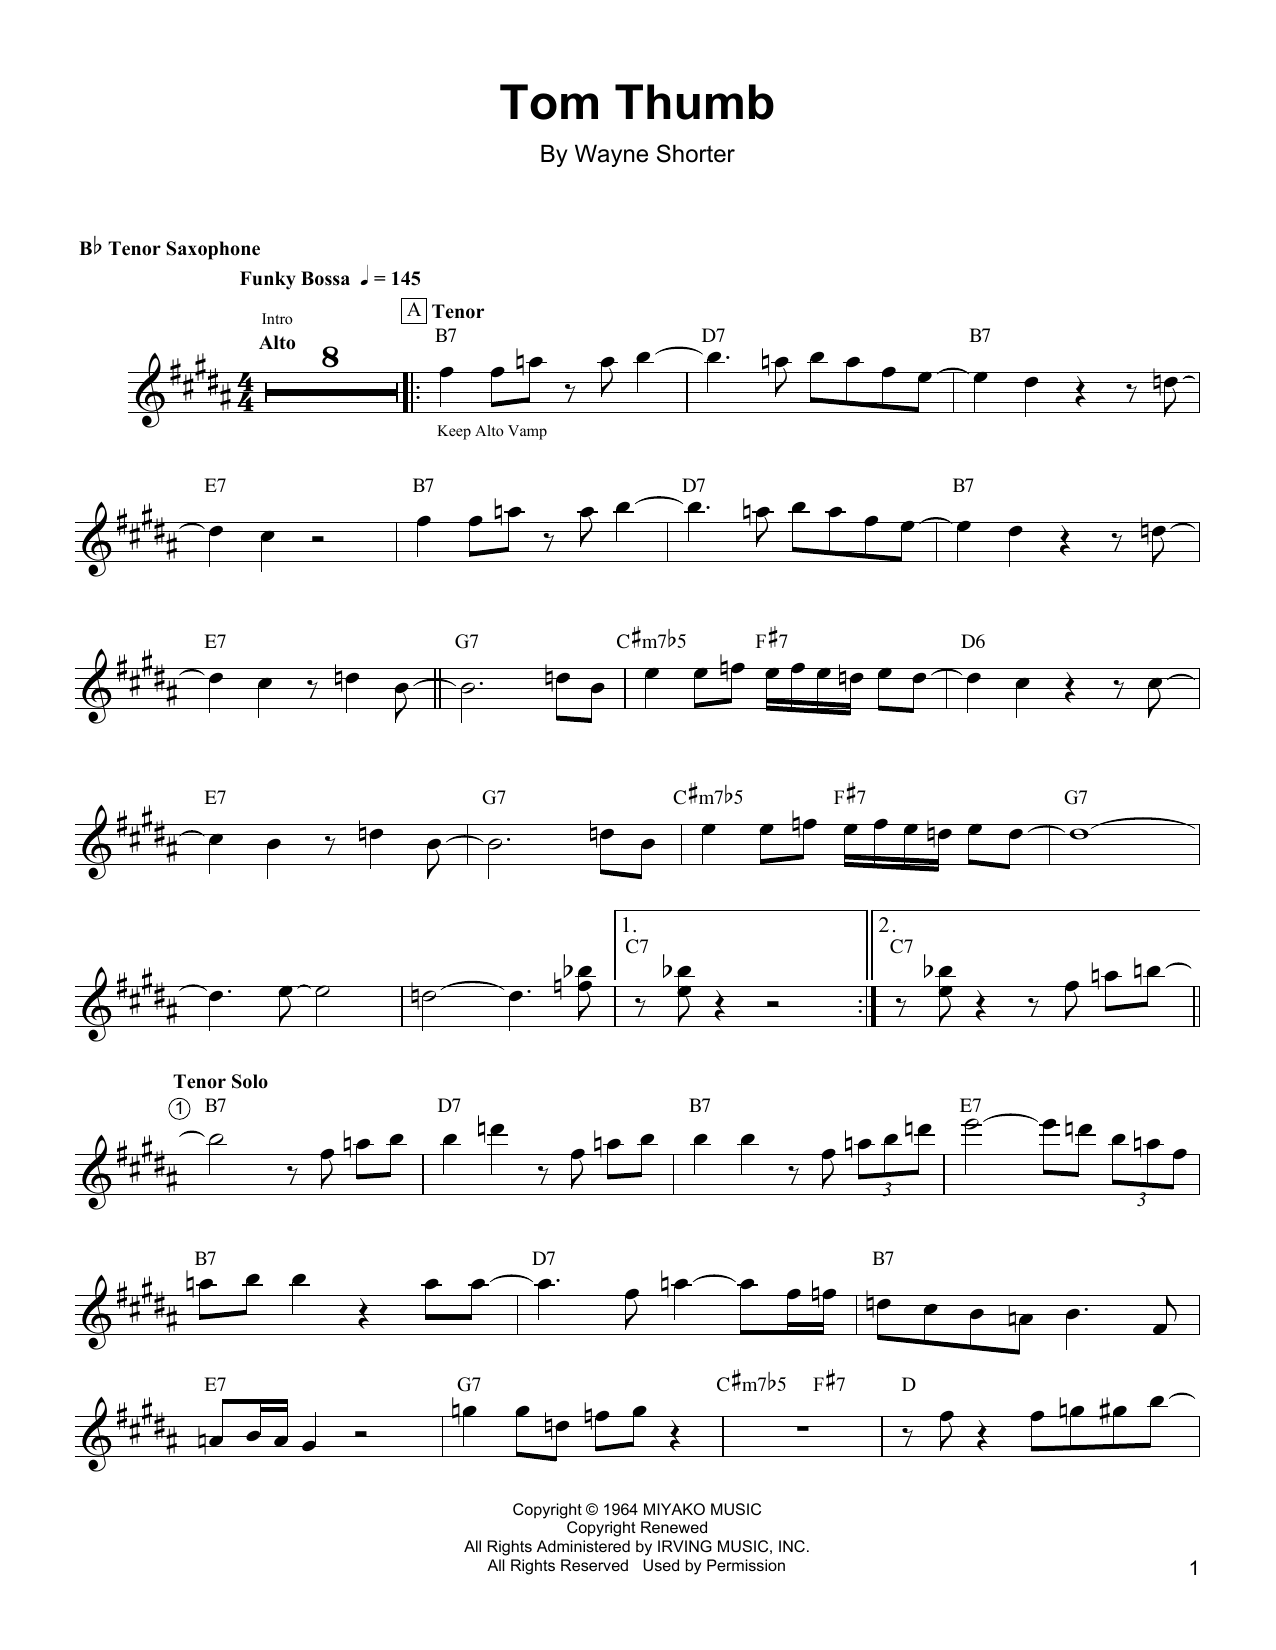 Wayne Shorter Tom Thumb Sheet Music Notes & Chords for Tenor Sax Transcription - Download or Print PDF